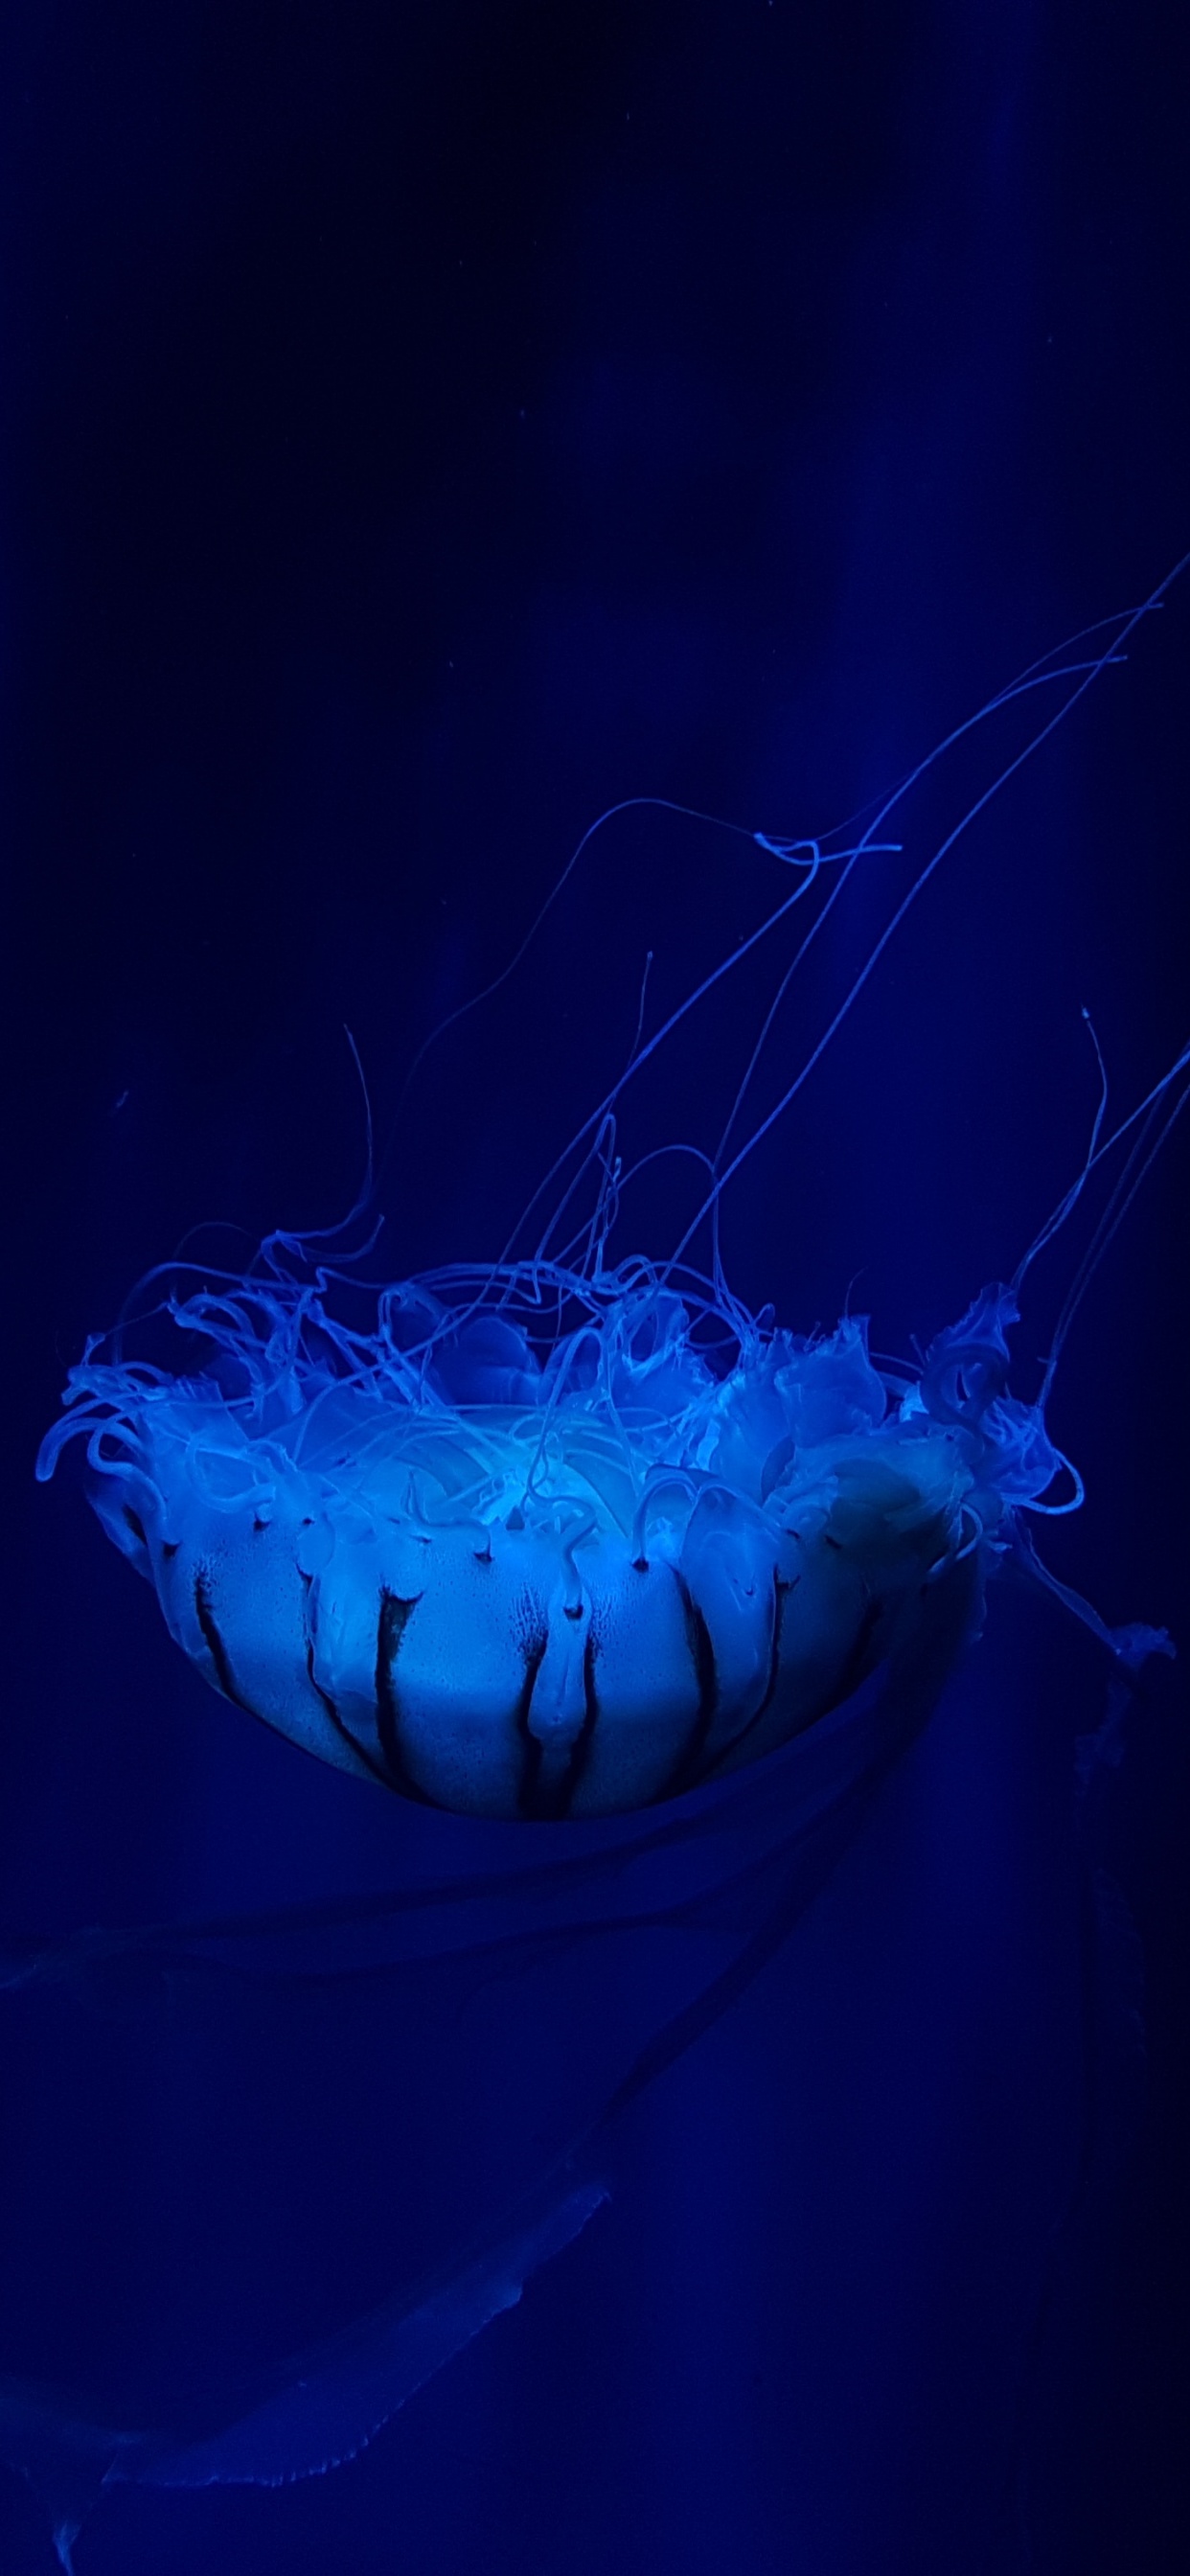 Blue Jellyfish in Blue Water. Wallpaper in 1242x2688 Resolution